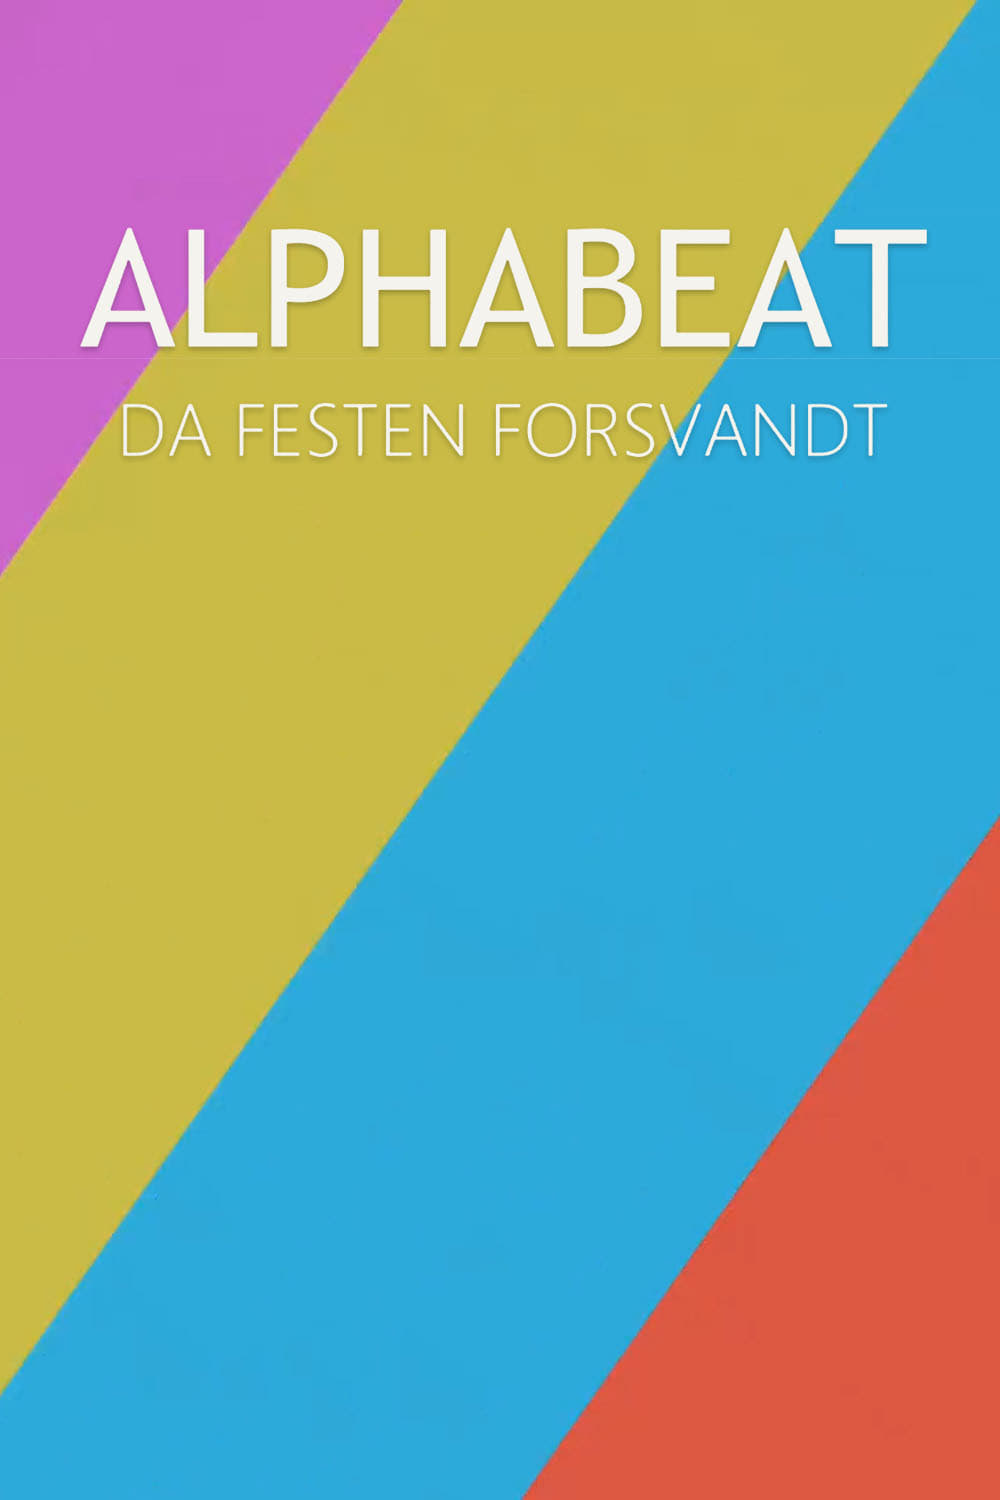 Alphabeat - Da festen forsvandt